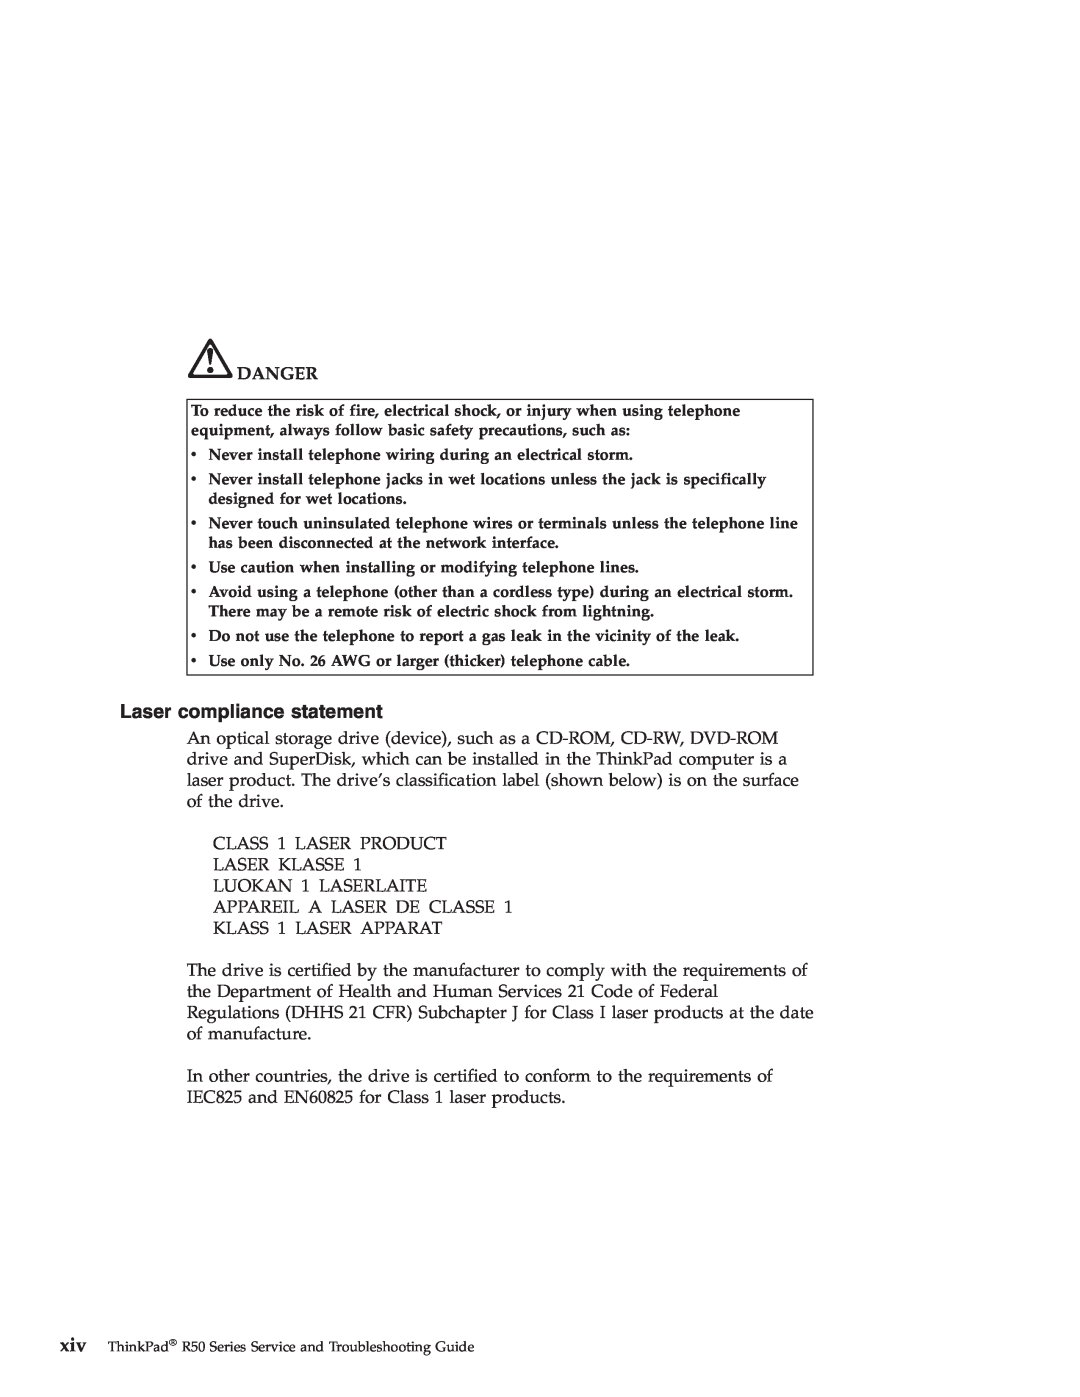 Lenovo R50 manual Laser compliance statement, Danger 